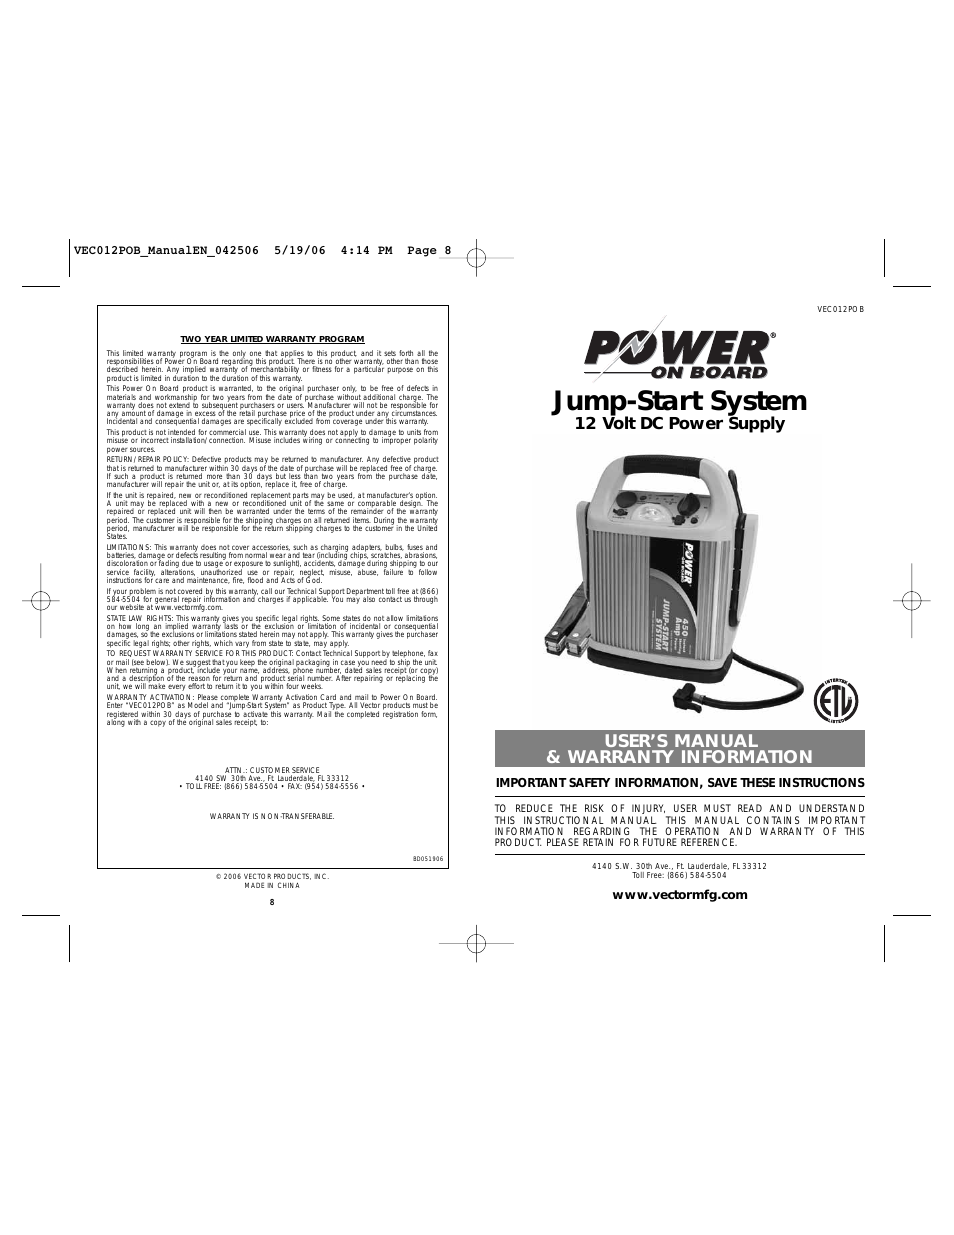 Power On Board VEC012POB